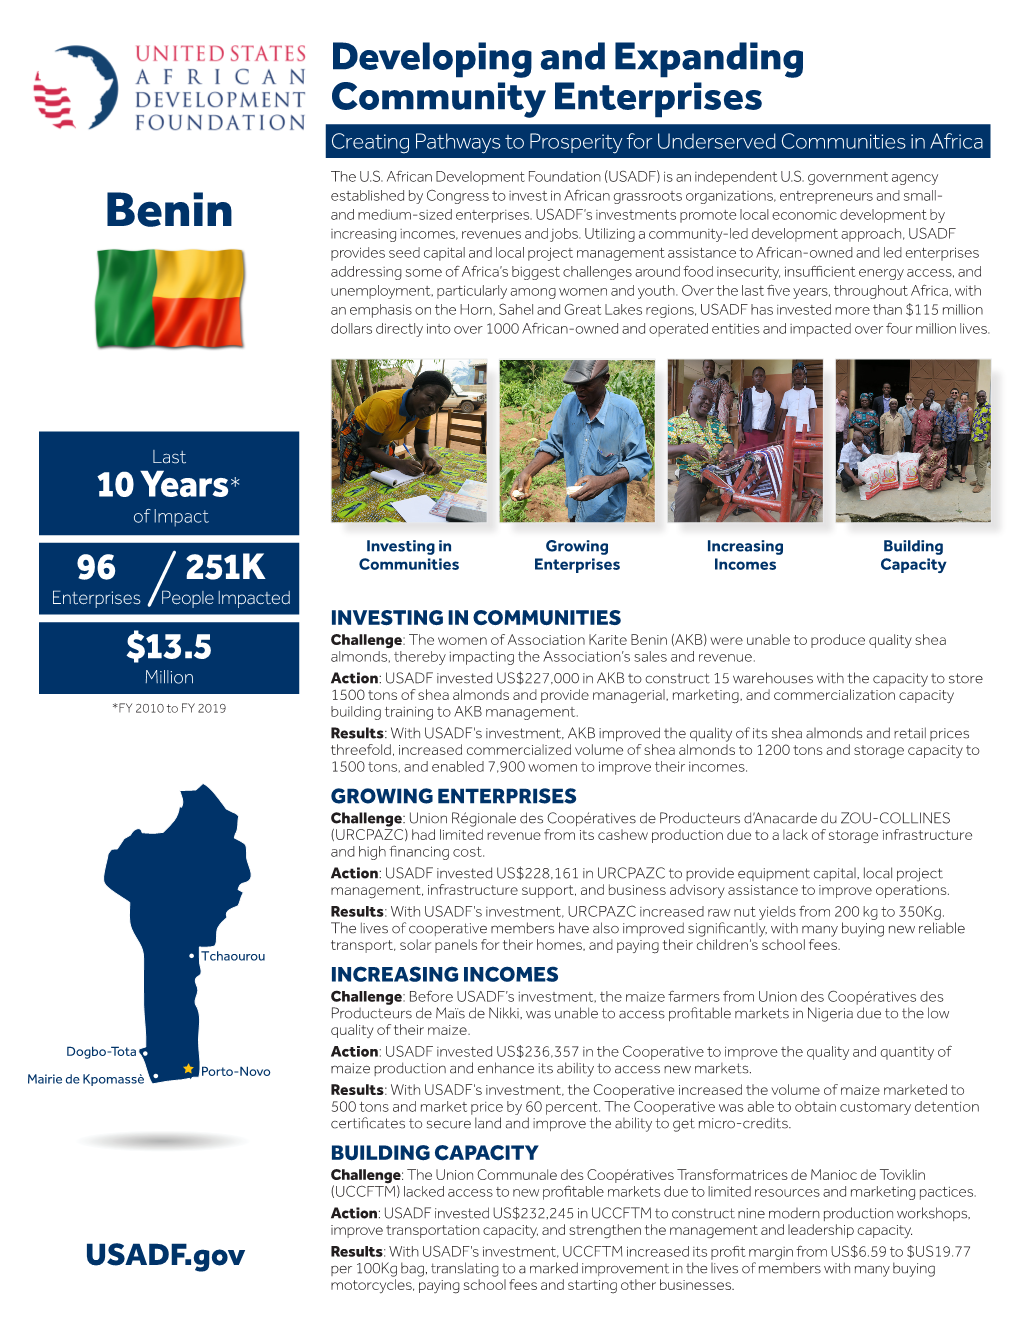 Benin Increasing Incomes, Revenues and Jobs